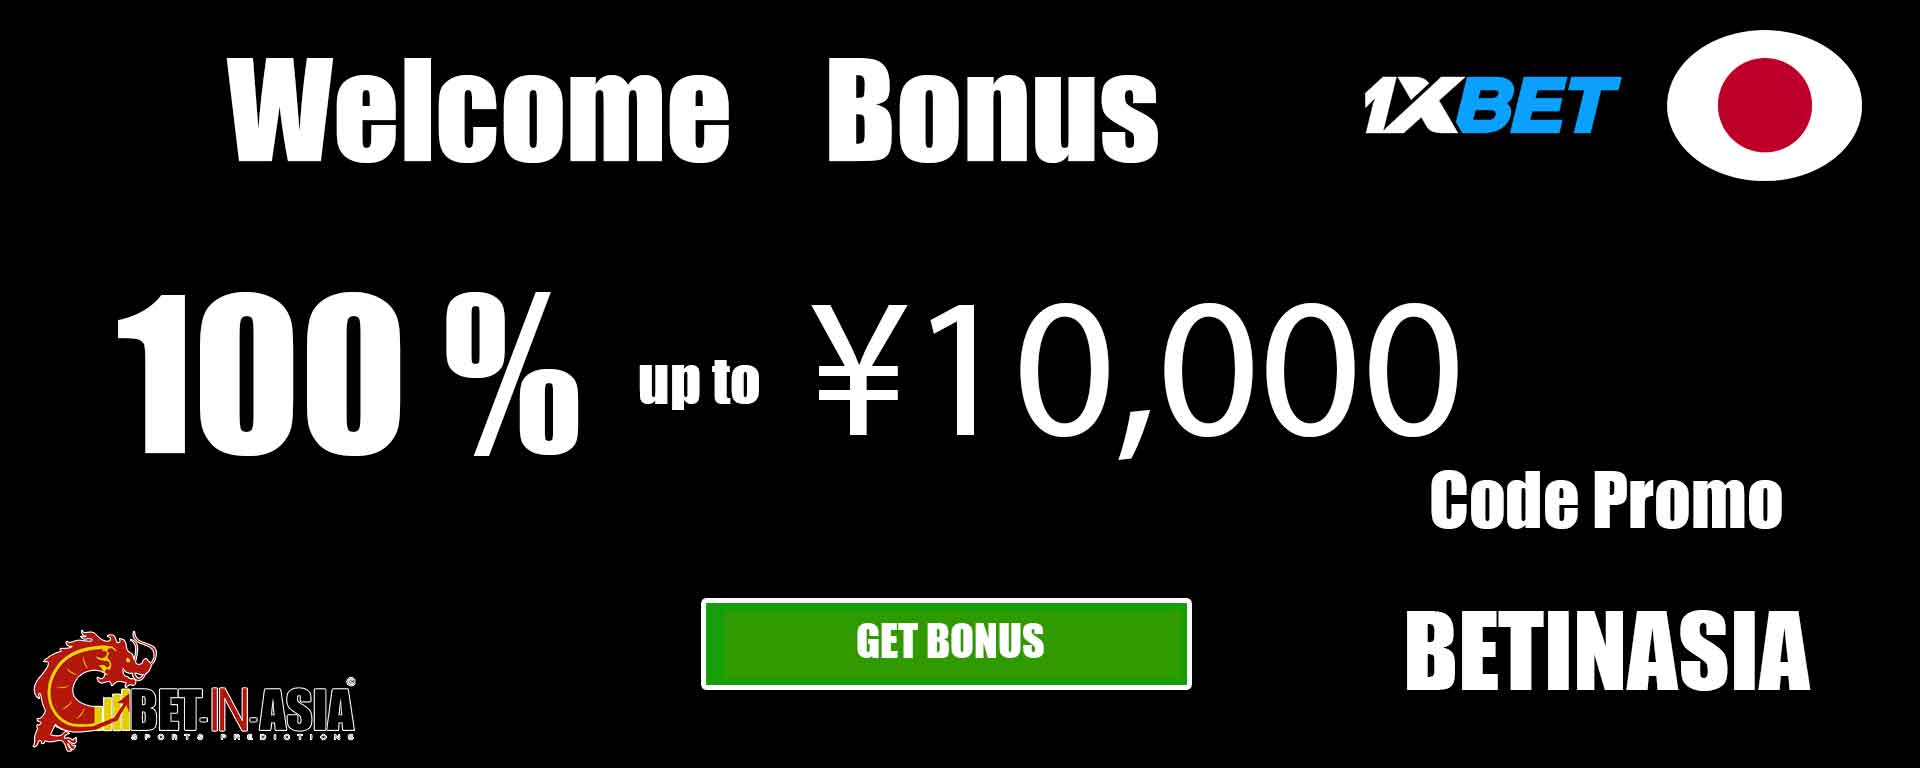 1xbet Japan welcome bonus 100 % on first deposit